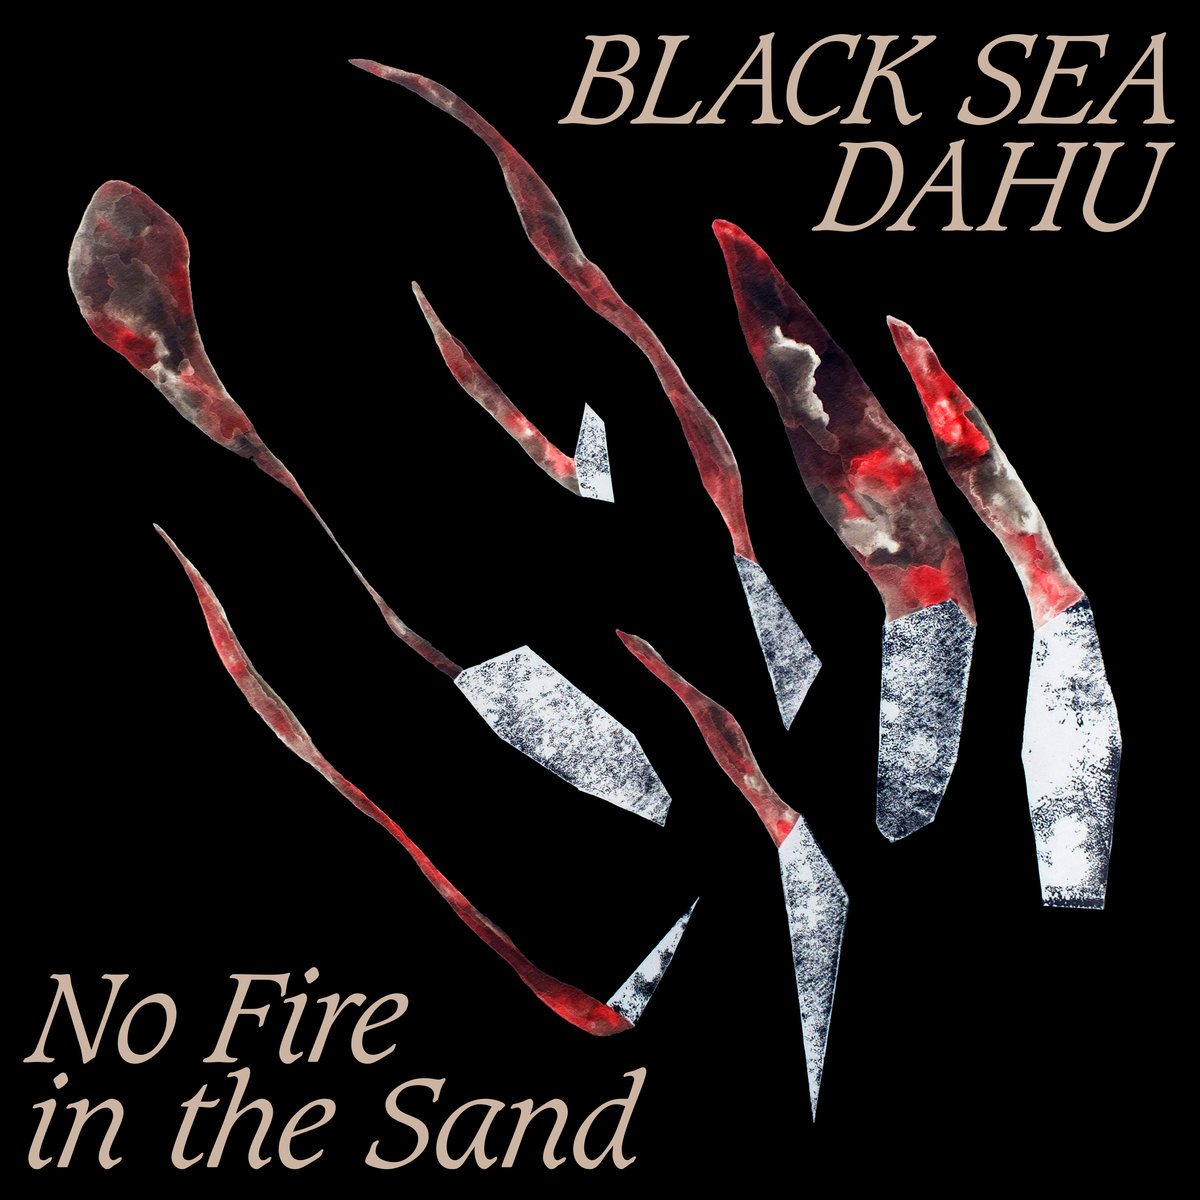 Black Sea Dahu album artwork